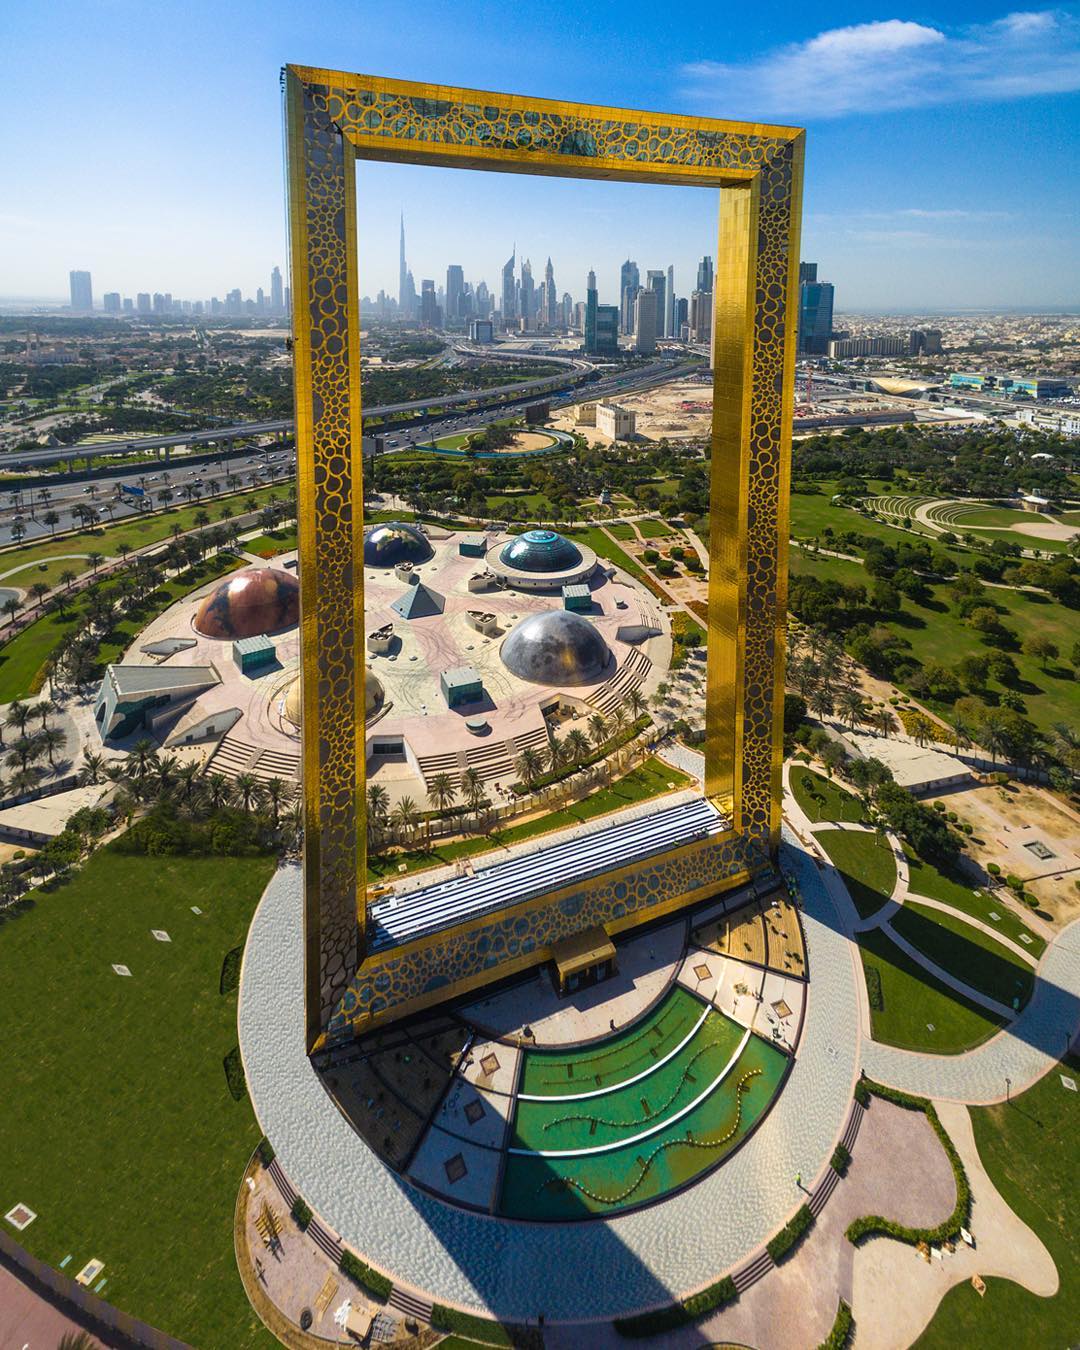 Dubai Frame - planned opening on January 1, 2018